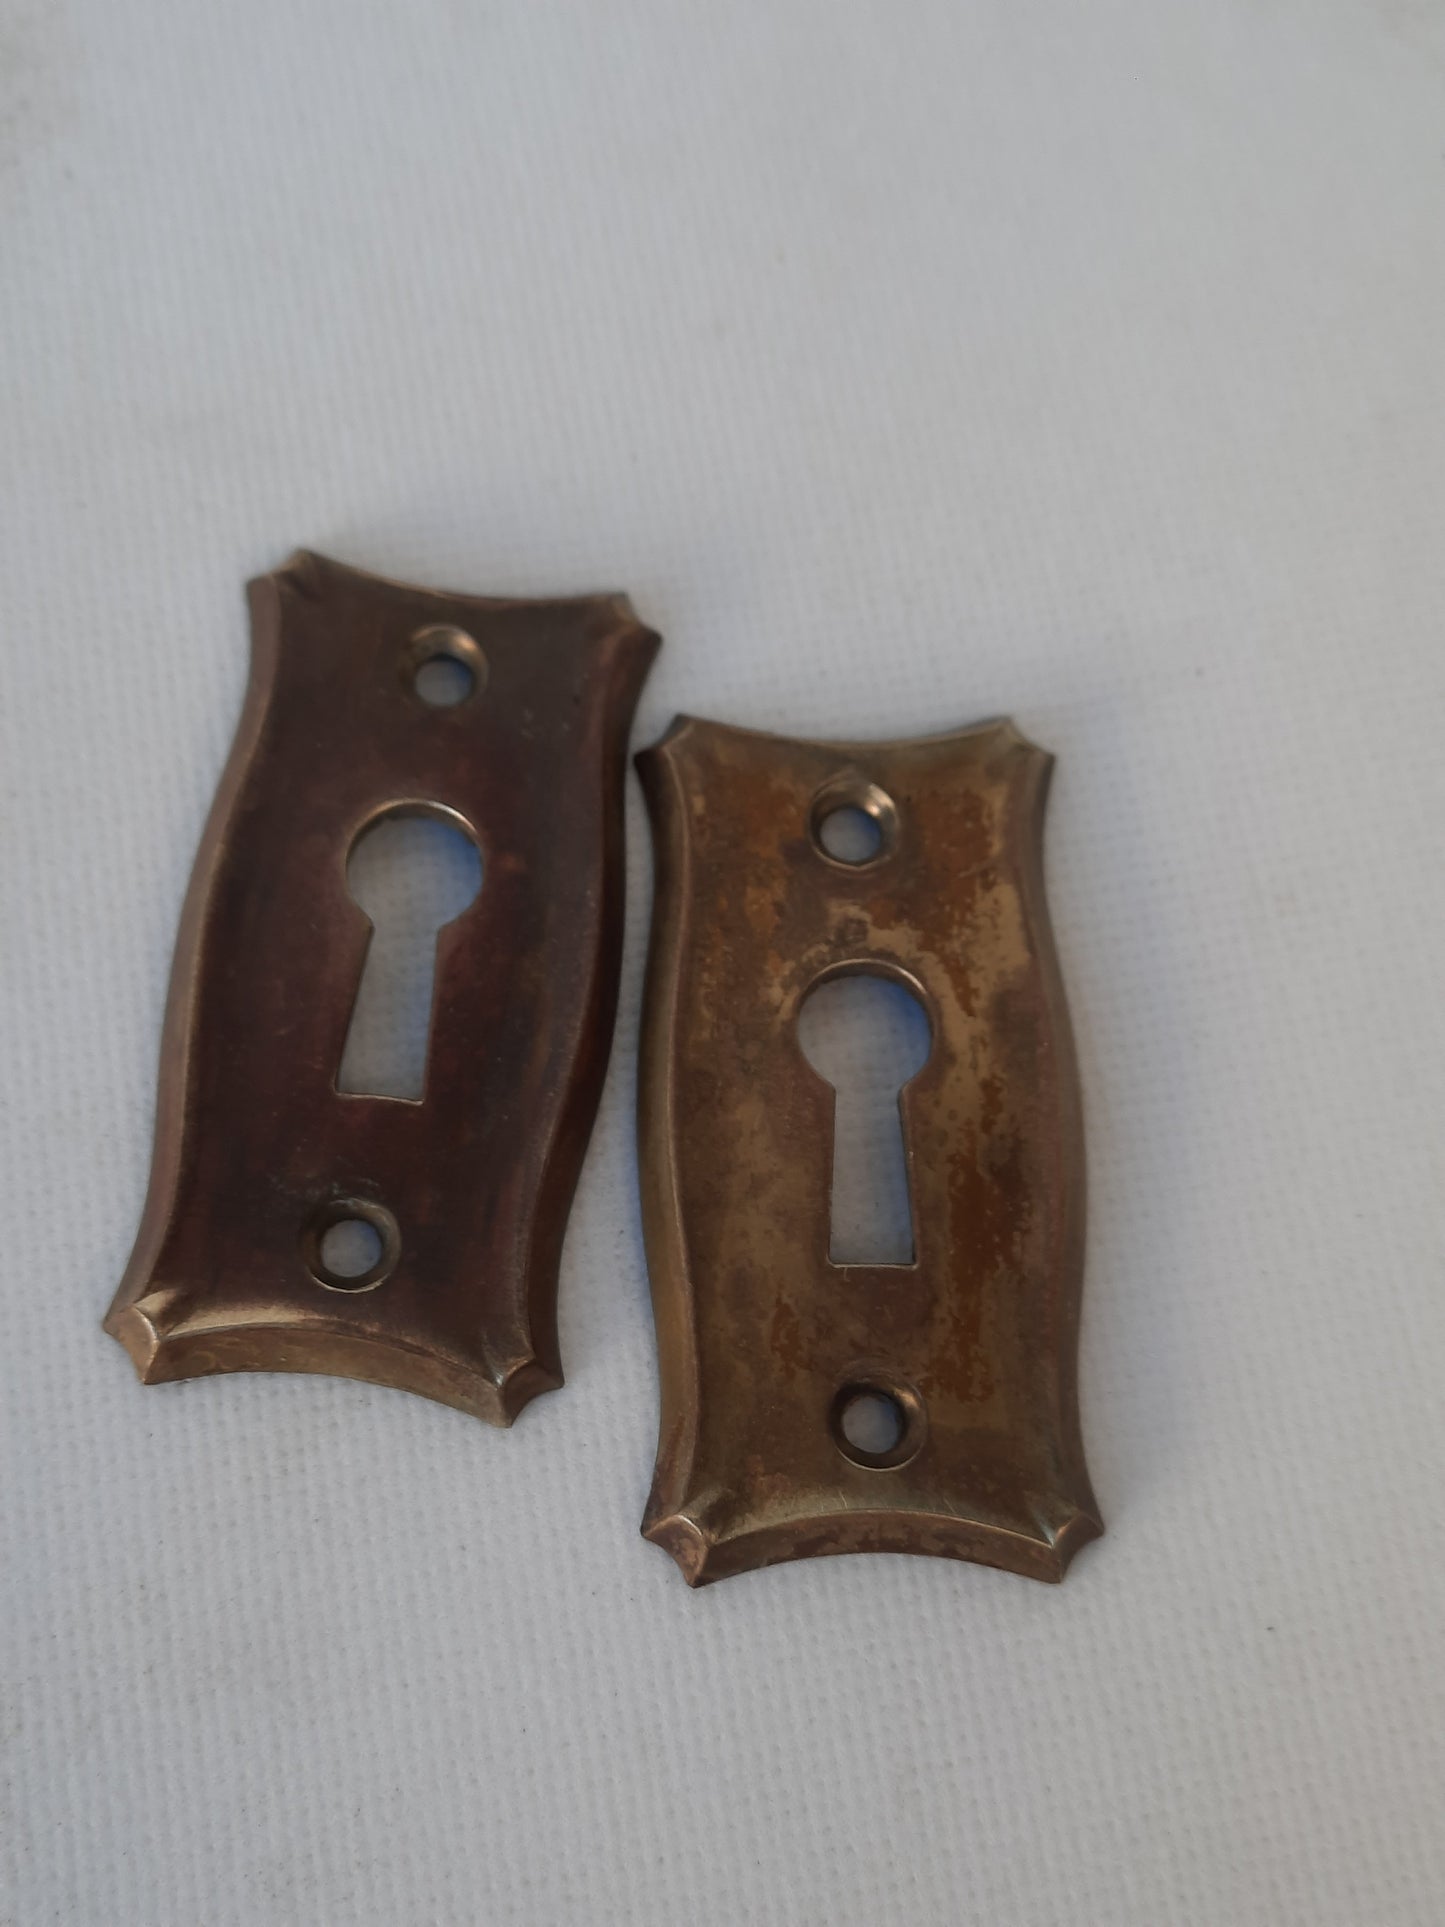 Antique Brass Pair of Keyhole Covers, Ornate Key Hole Escutcheon Plates 121502